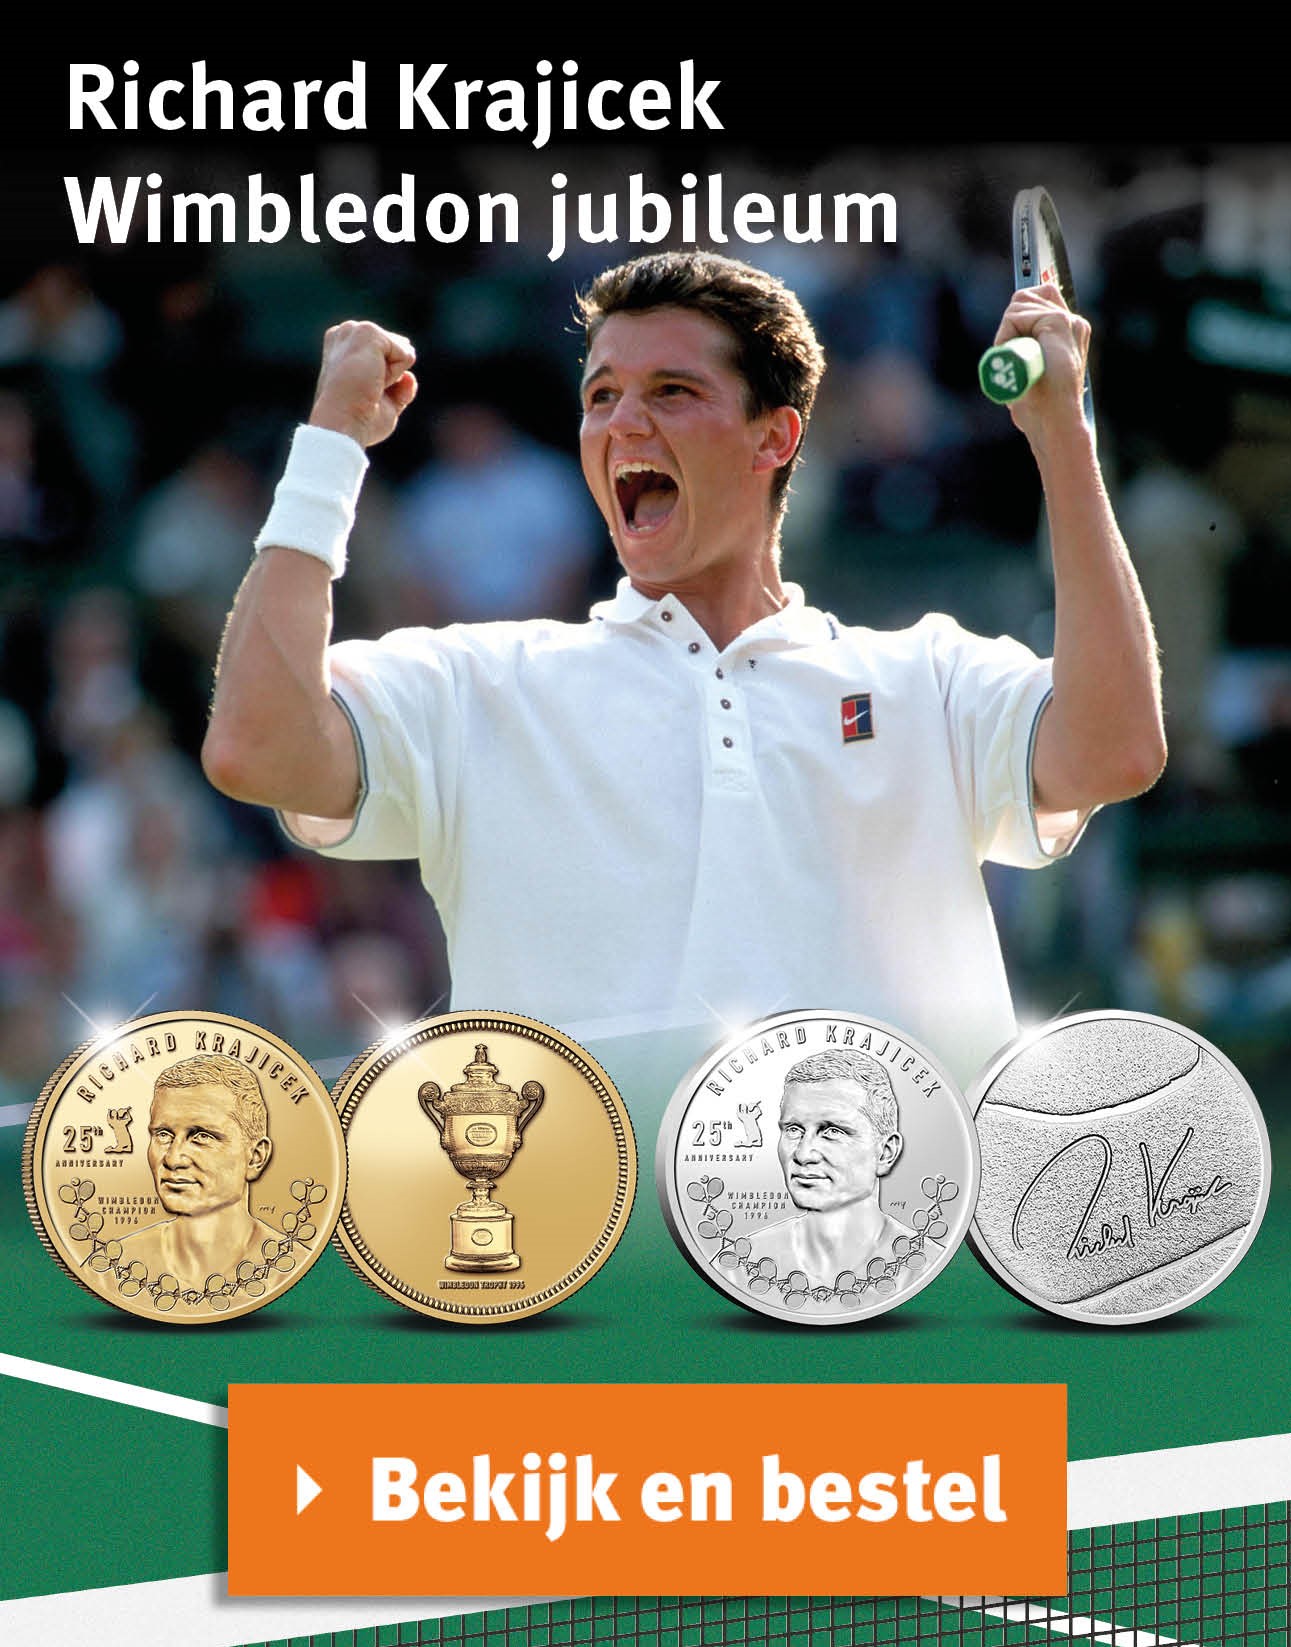 Bekijk en bestel: Richard Krajicek Wimbledon jubileum uitgiften